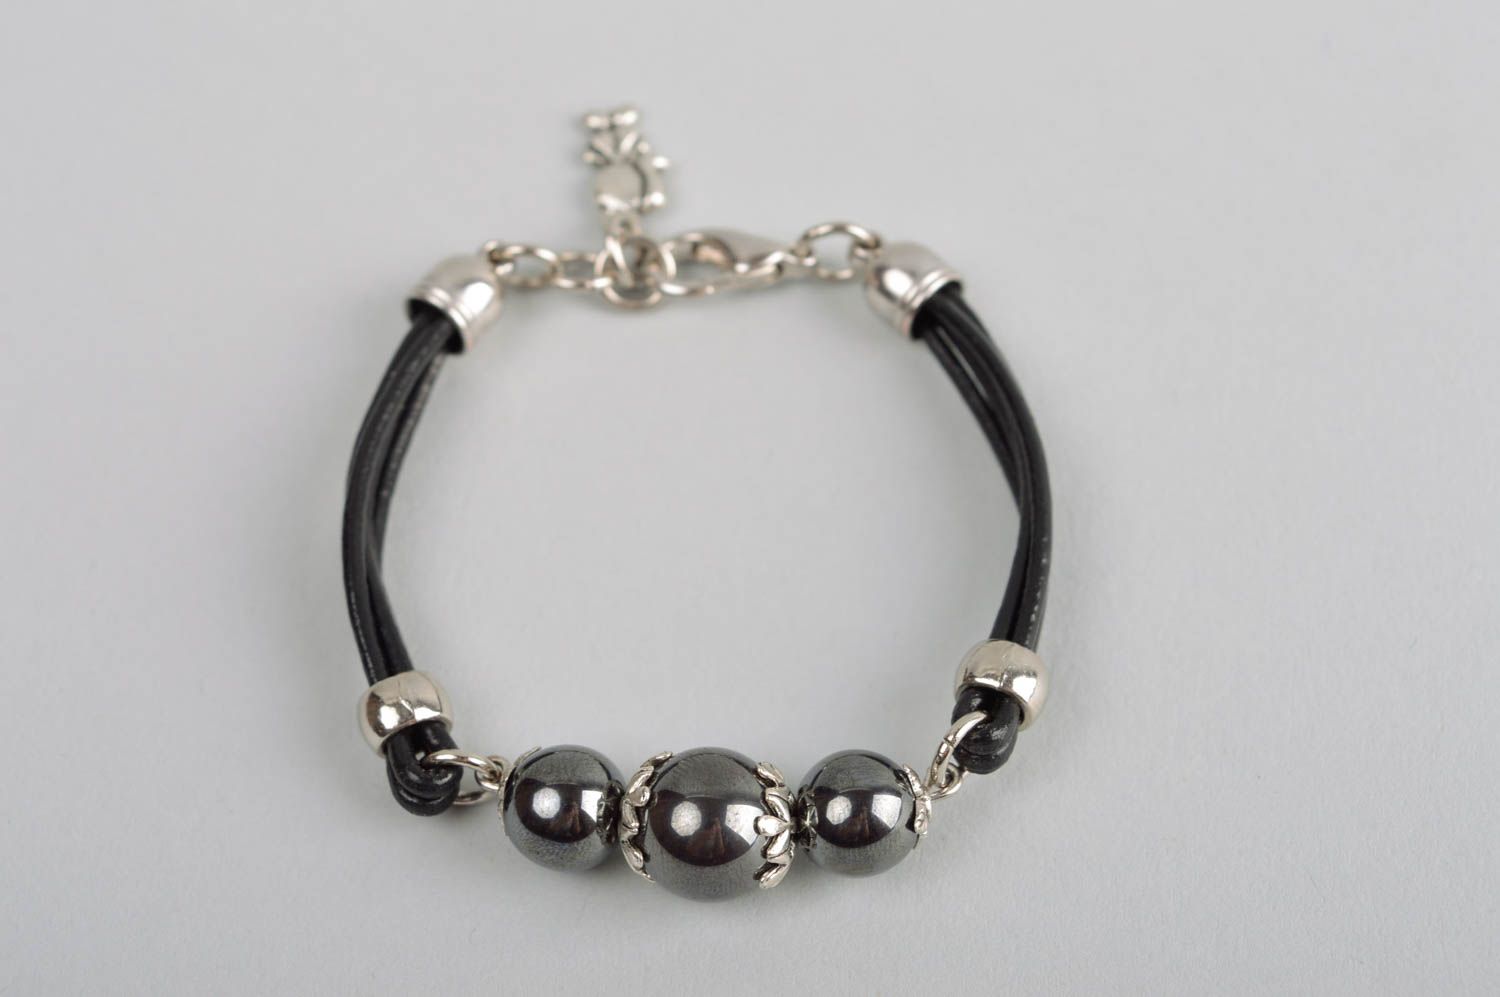 Unusual handmade gemstone bracelet leather bracelet designs gifts for her photo 2